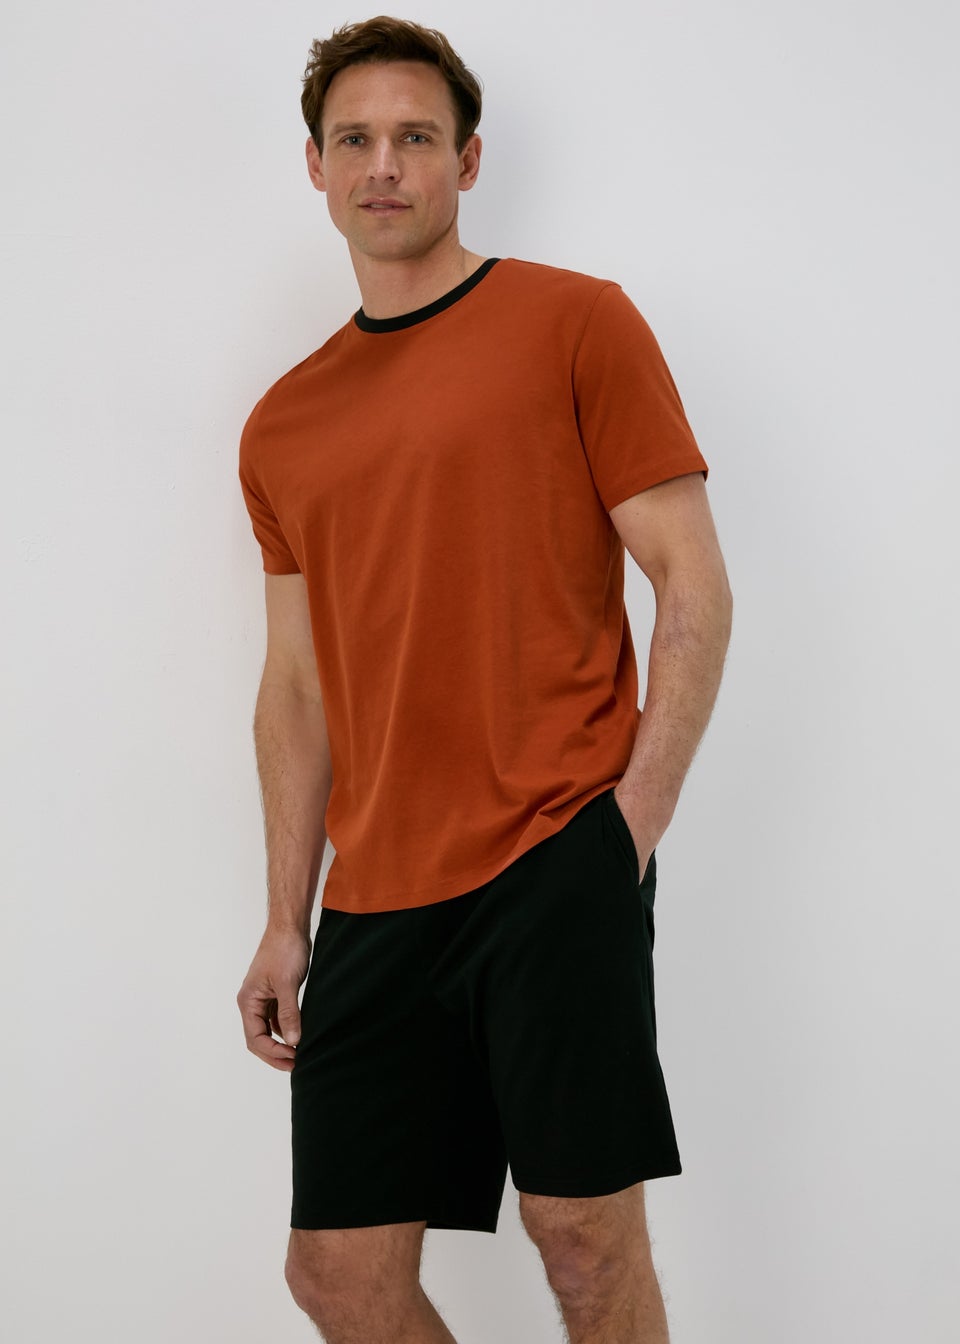 Orange Basic T-Shirt & Shorts Set